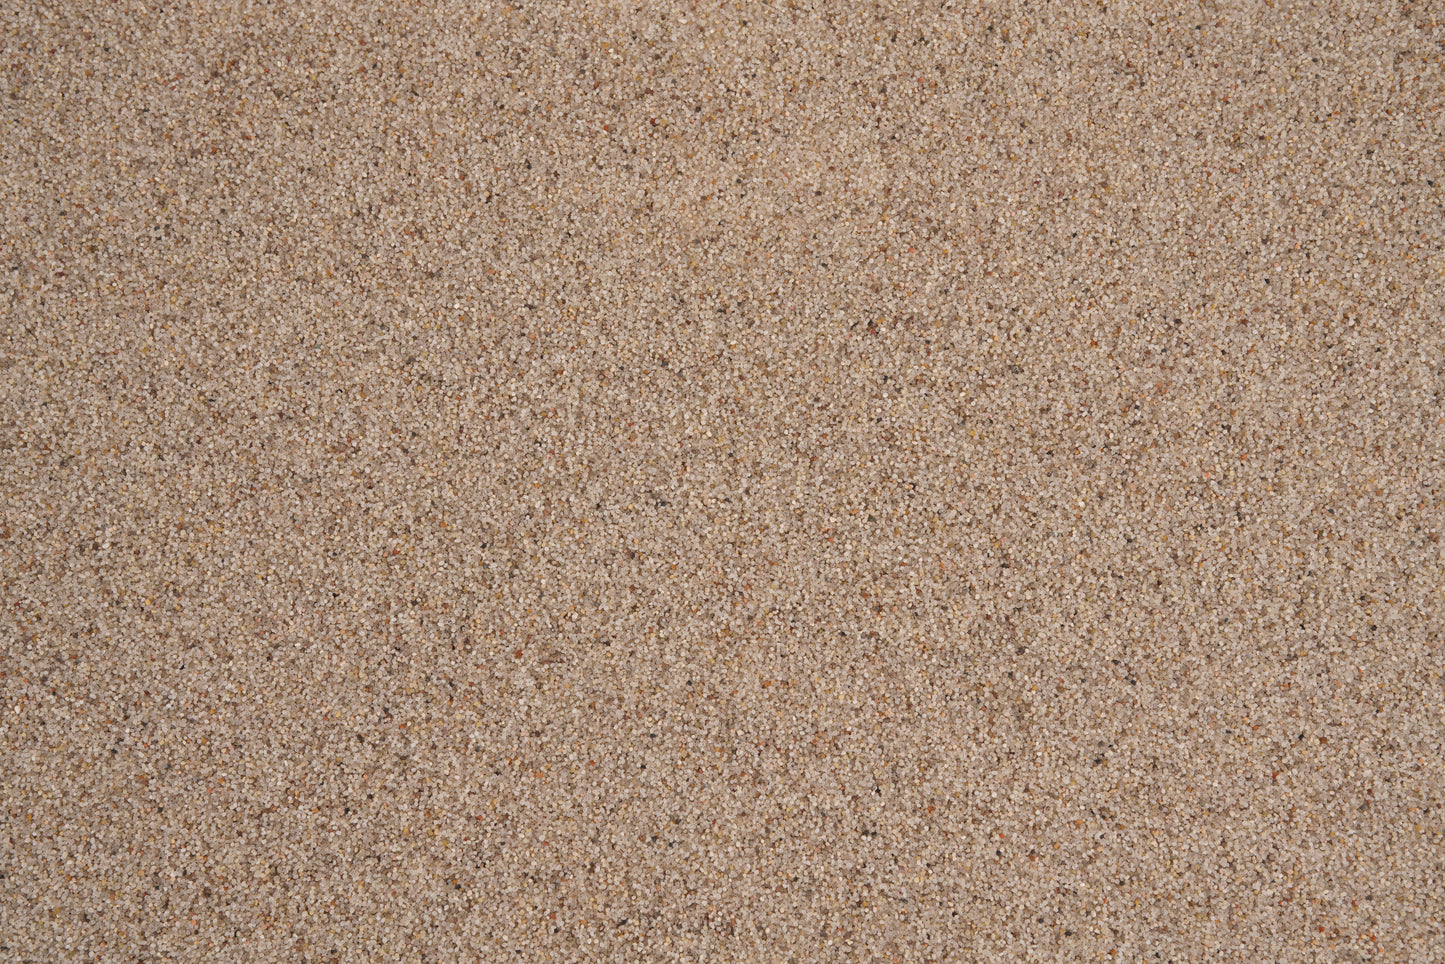 LANDEN Chingwe Aquascape Sand for Aquarium Landscape, 0.4-0.9mm 2L (7.52lbs)